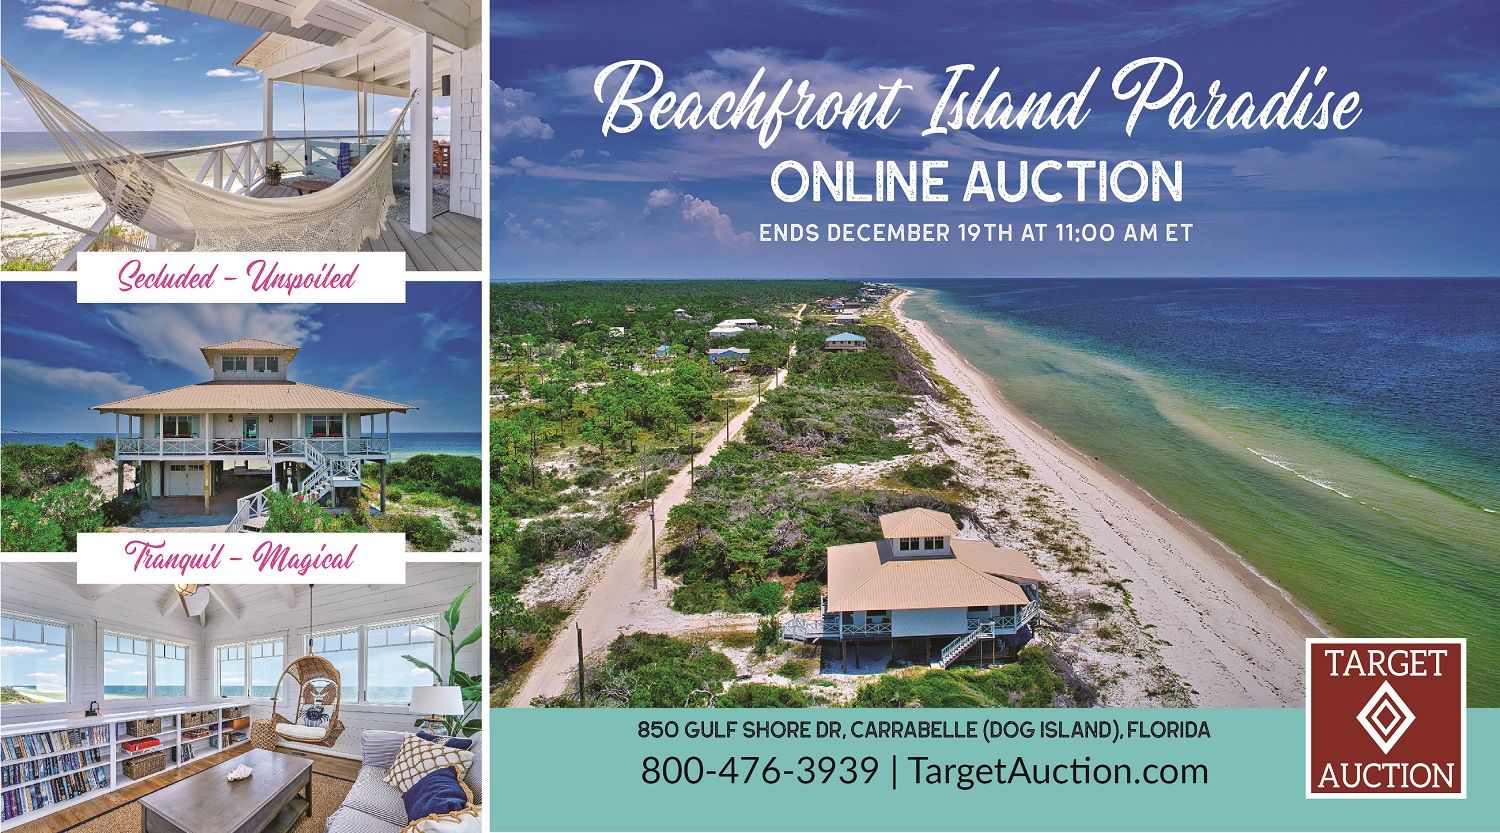 Beachfront Island Paradise Auction Dec 19th